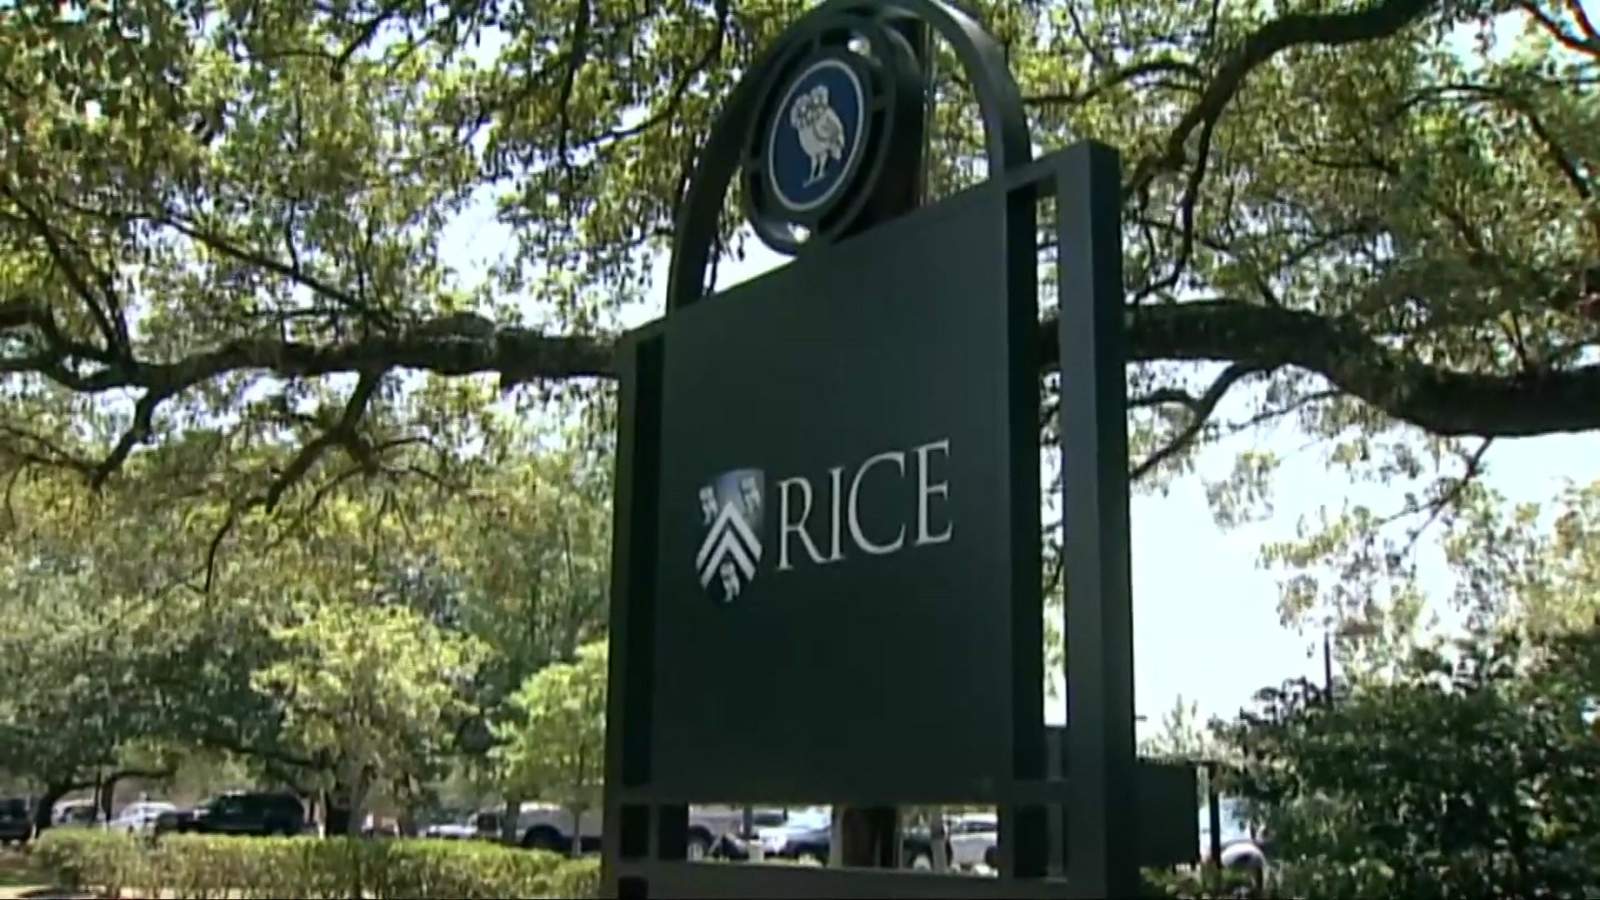 Update: Rice University says research employee being self-quarantined due to possible coronavirus exposure